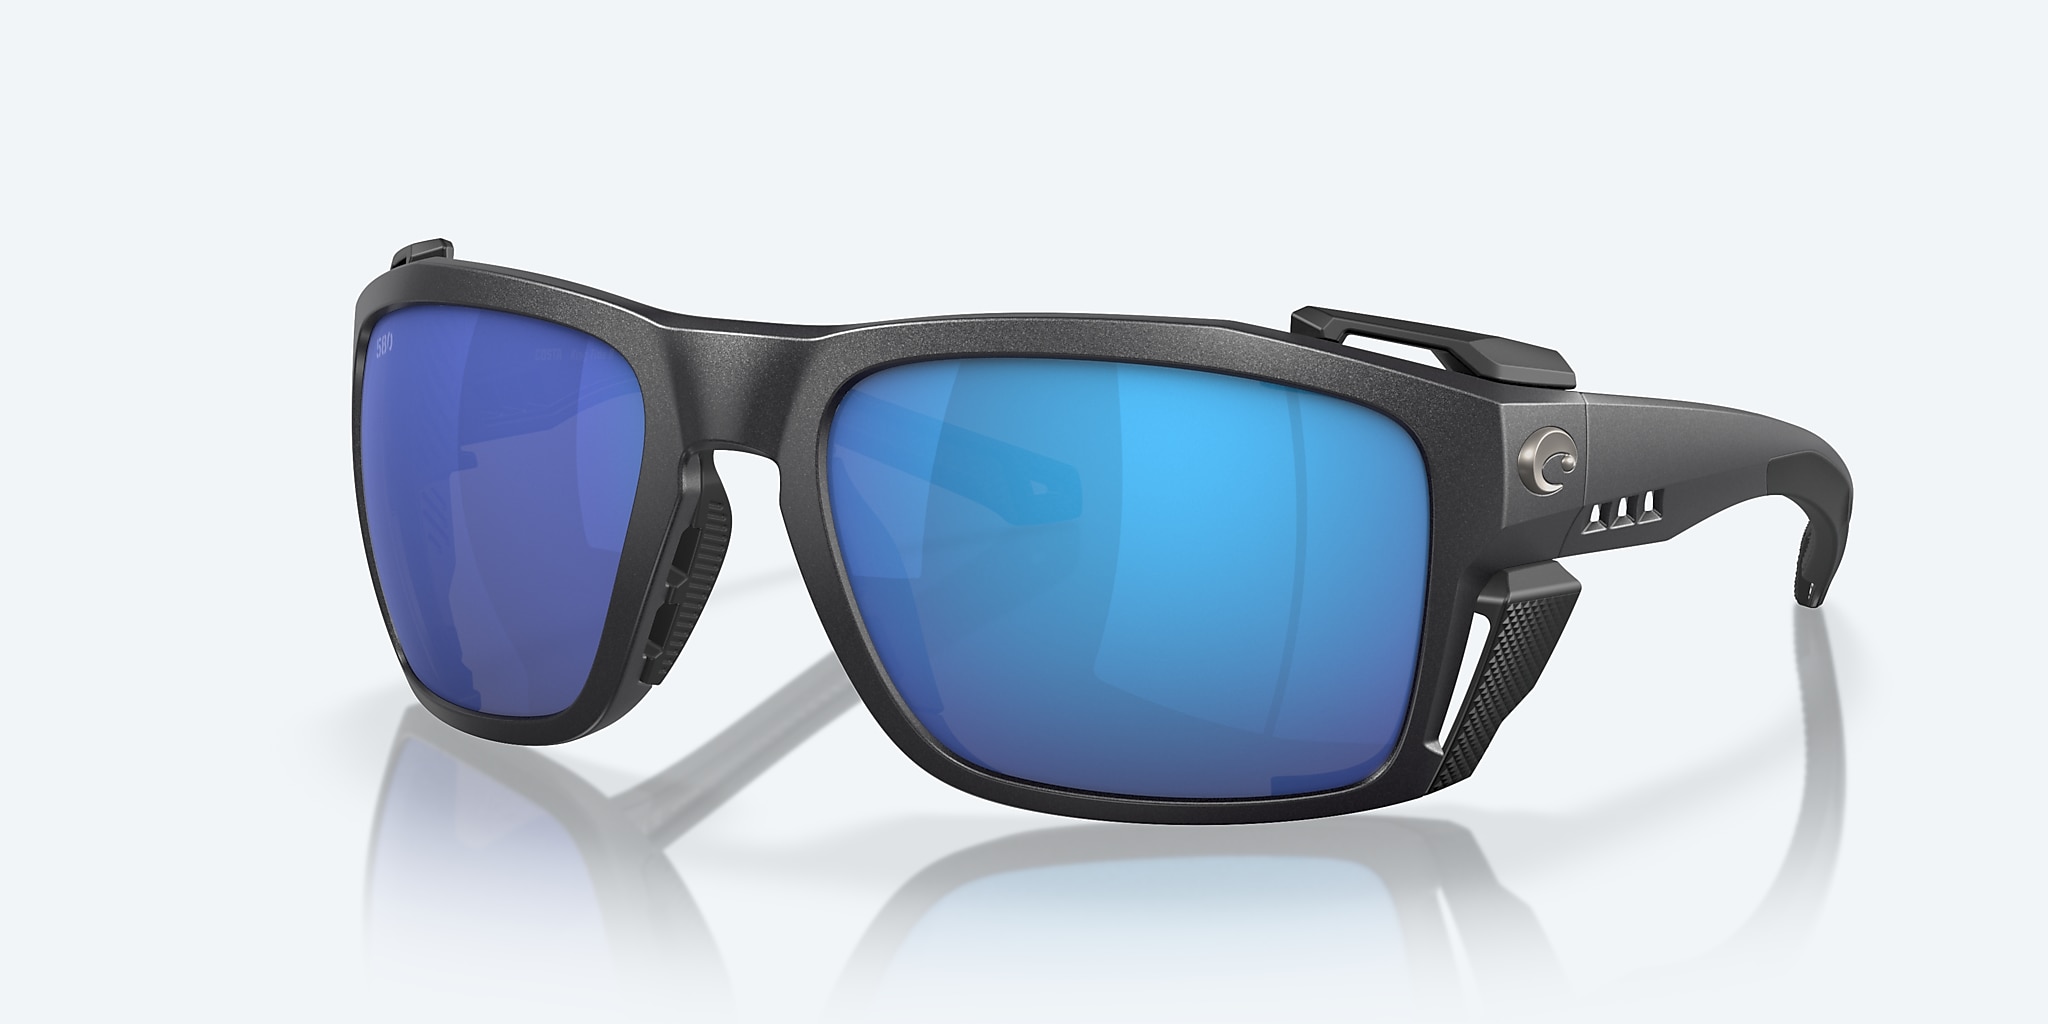 King Tide 8 Polarized Sunglasses in Blue Mirror